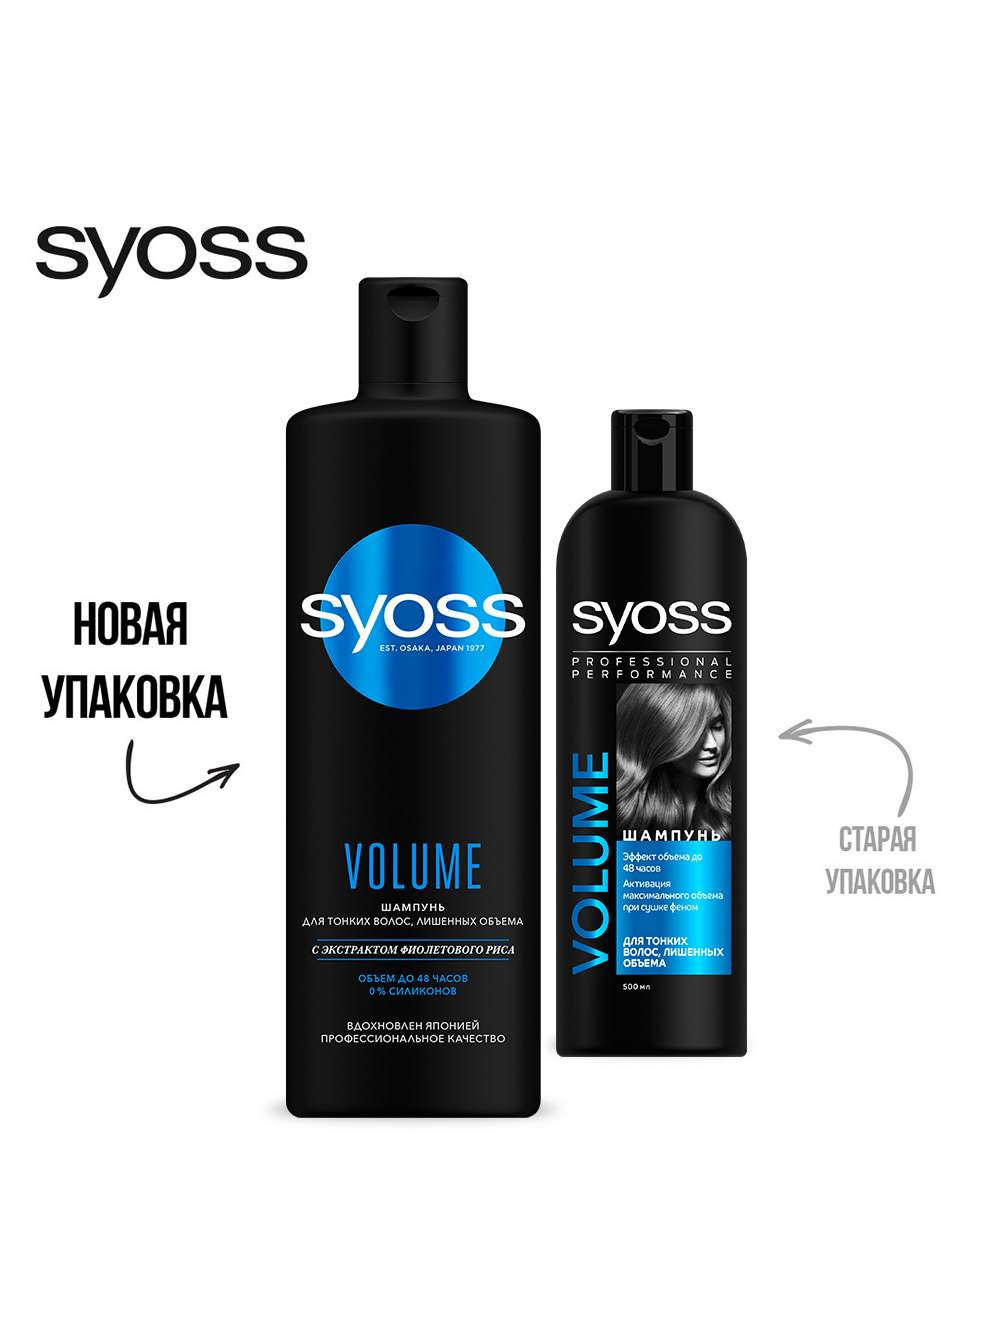 syoss volume szampon